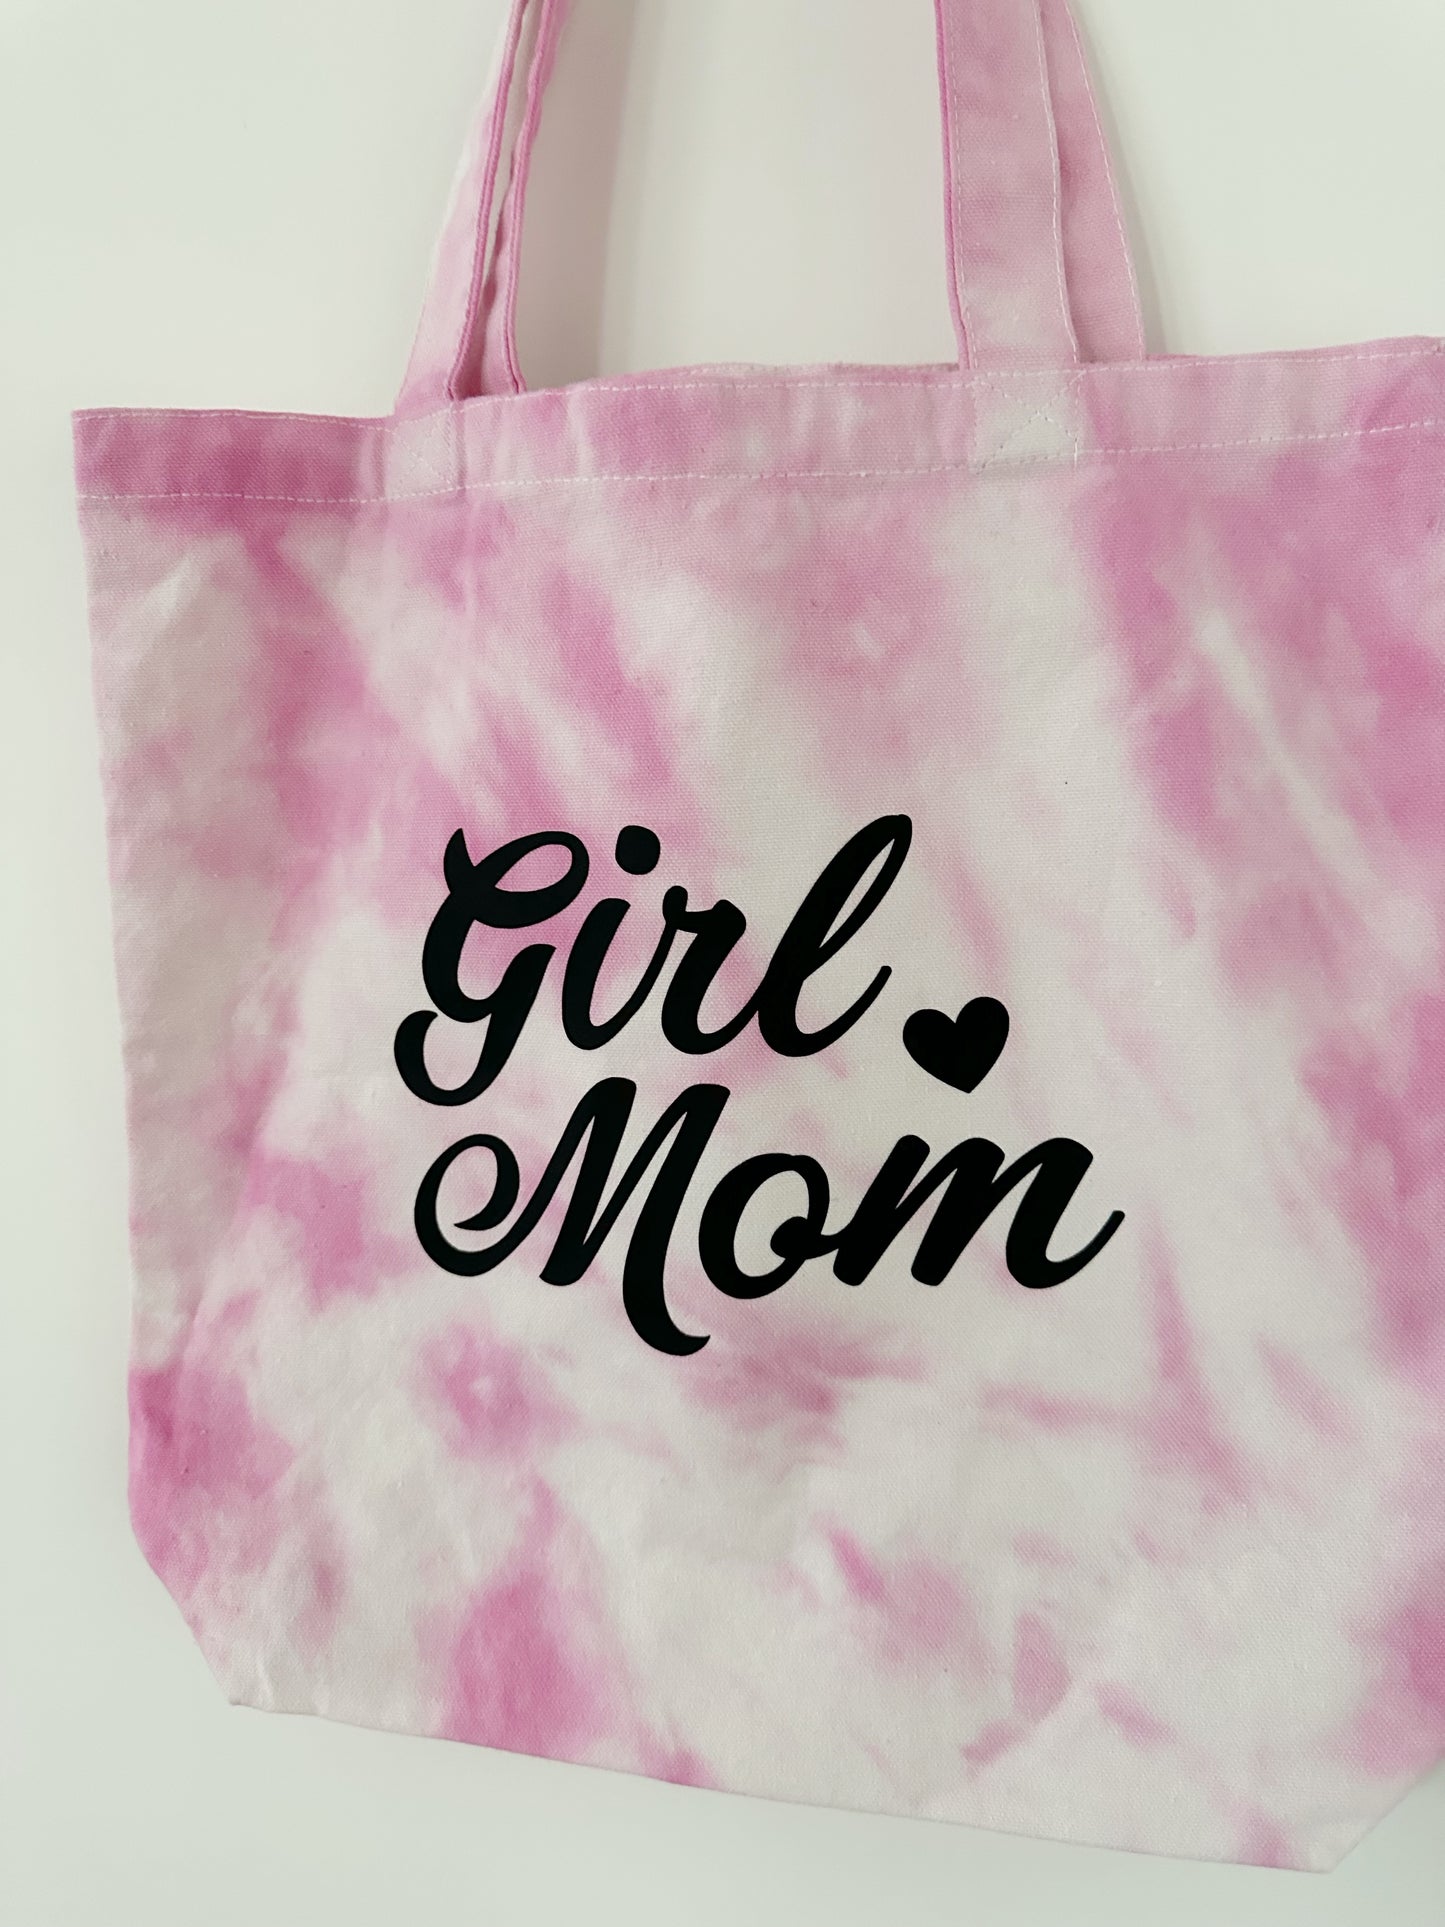 GIRL MOM TOTE ♡ tie-dye tote bag with girl mom print